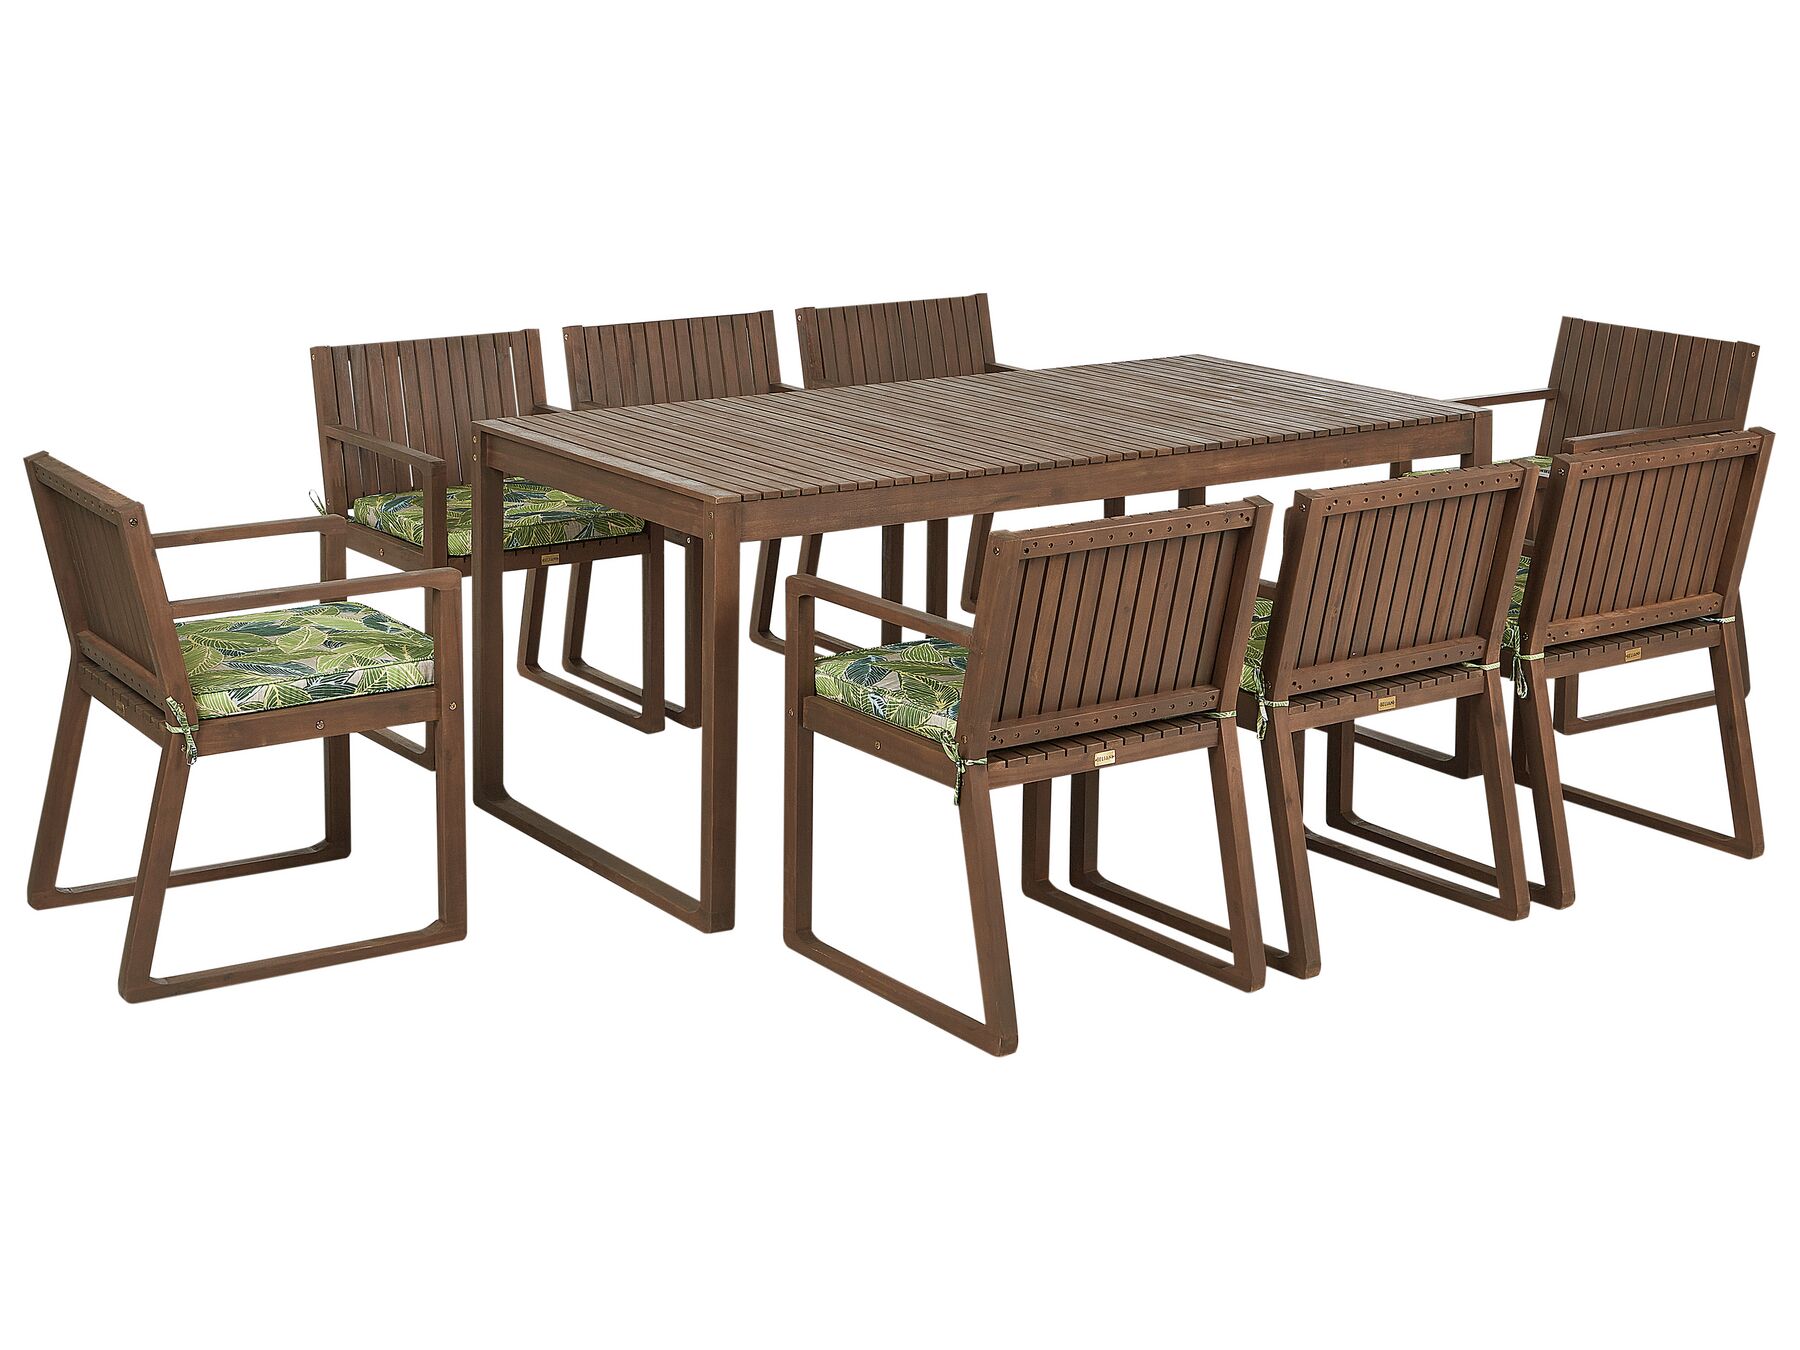 8 Seater Dark Acacia Wood Garden Dining Set with Leaf Pattern Green Cushions SASSARI_921288